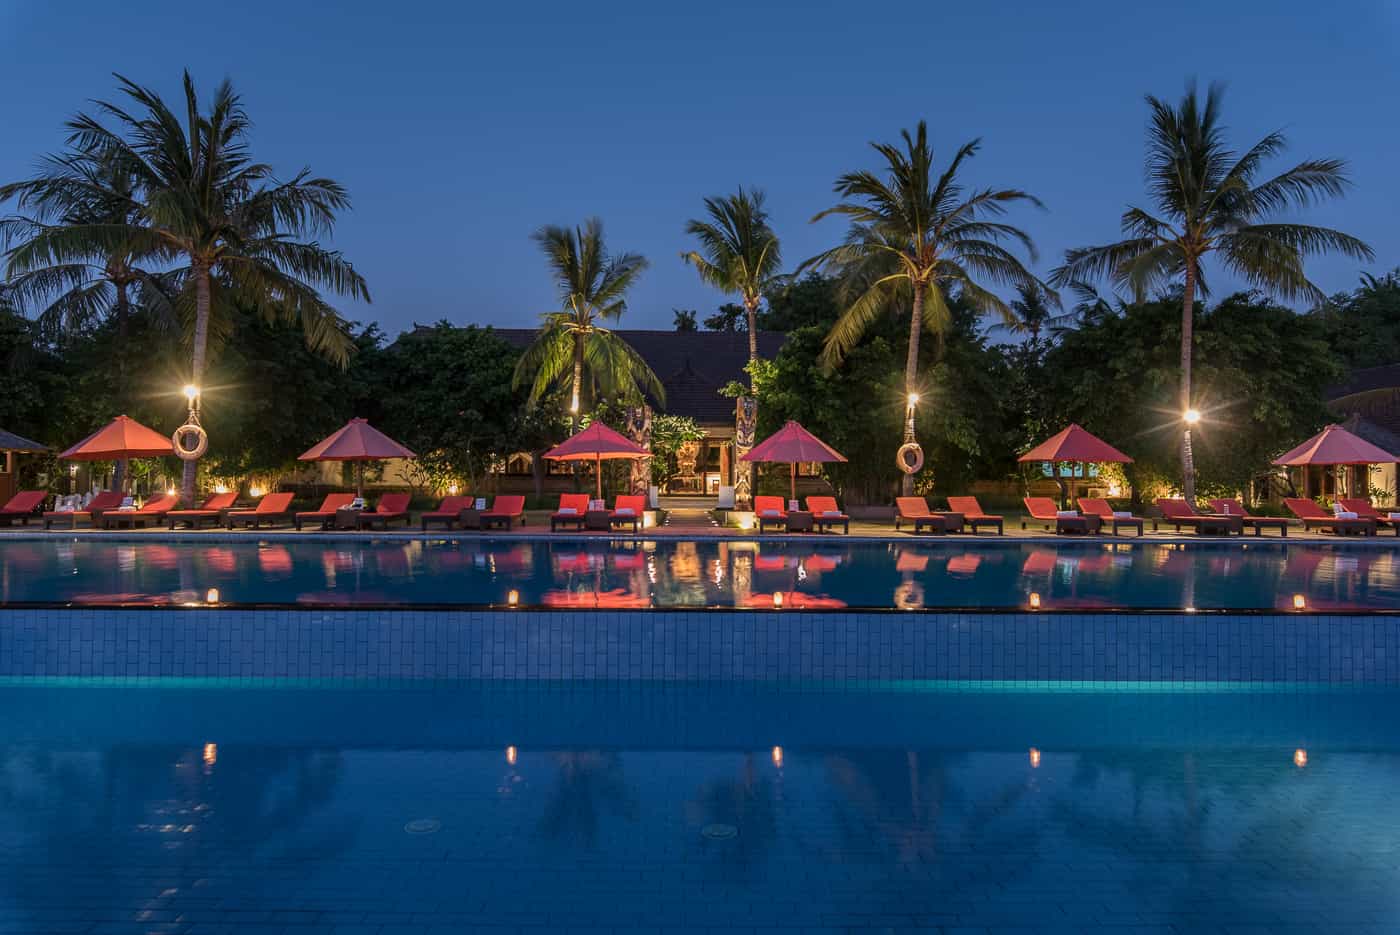 Nightime pool shot at Hotel Ombal Sunset in Gili Trawangan Island of Lombok Indonesia